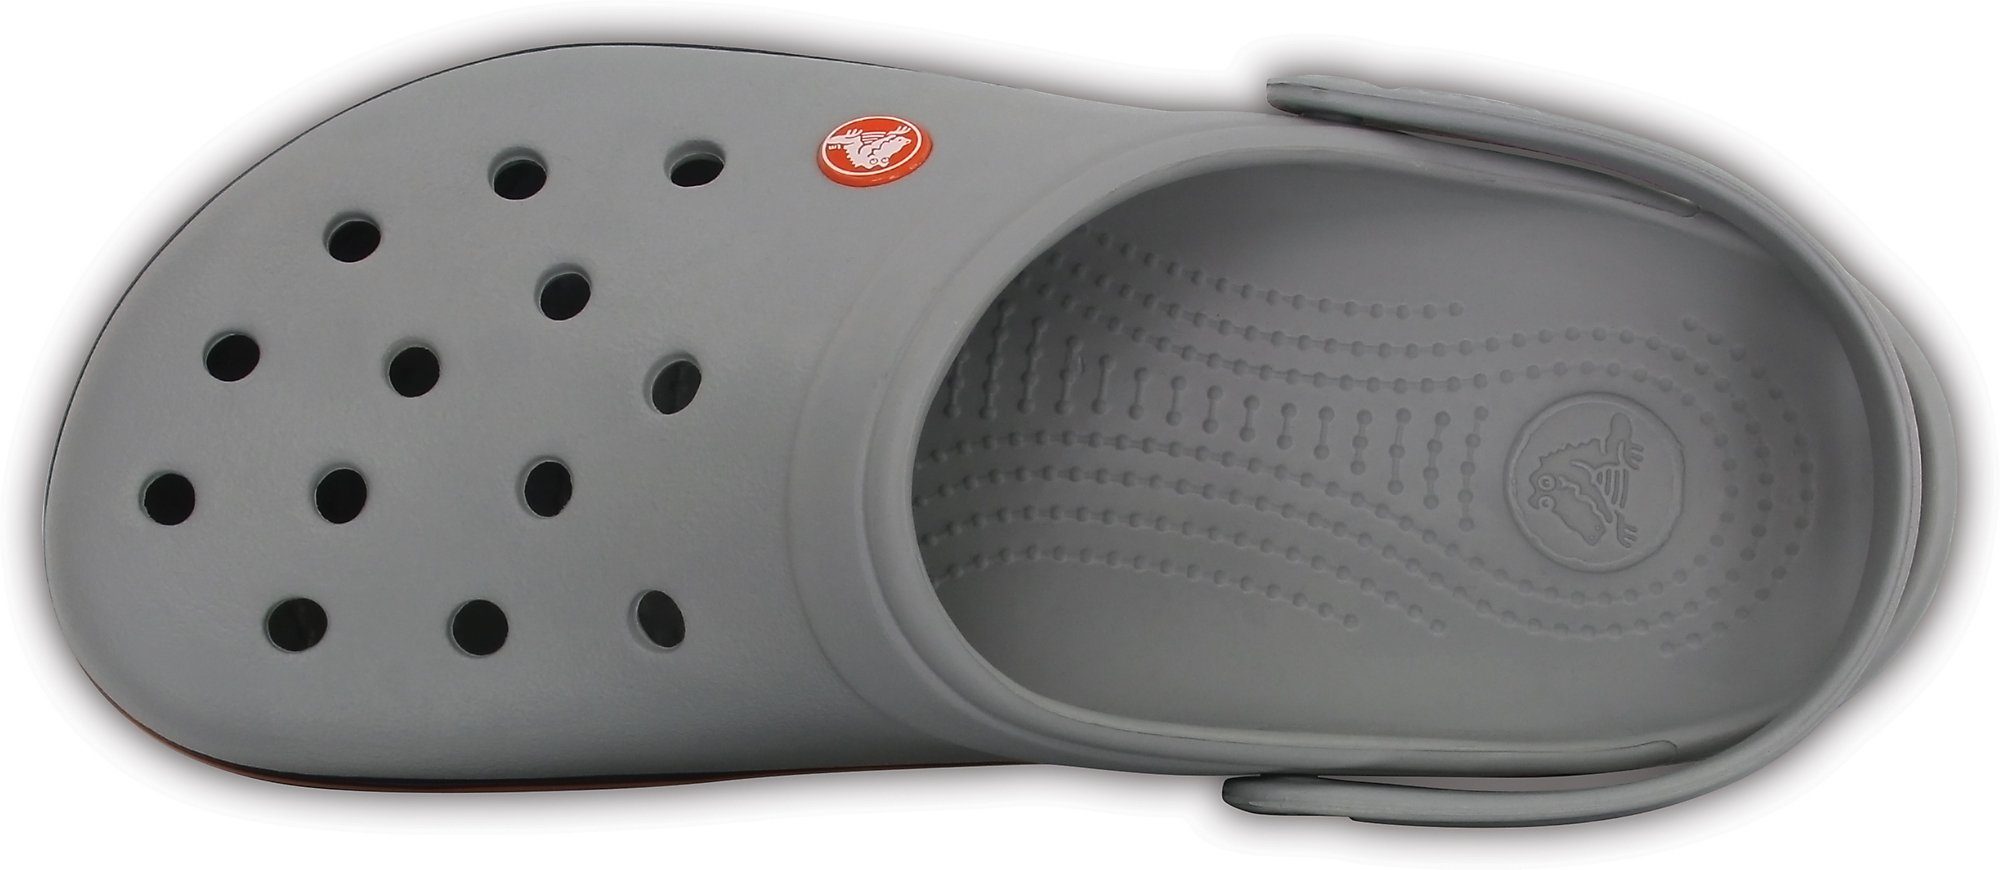 grau-schwarz-orange Crocs Laufsohle mit farbiger Clog Crocband